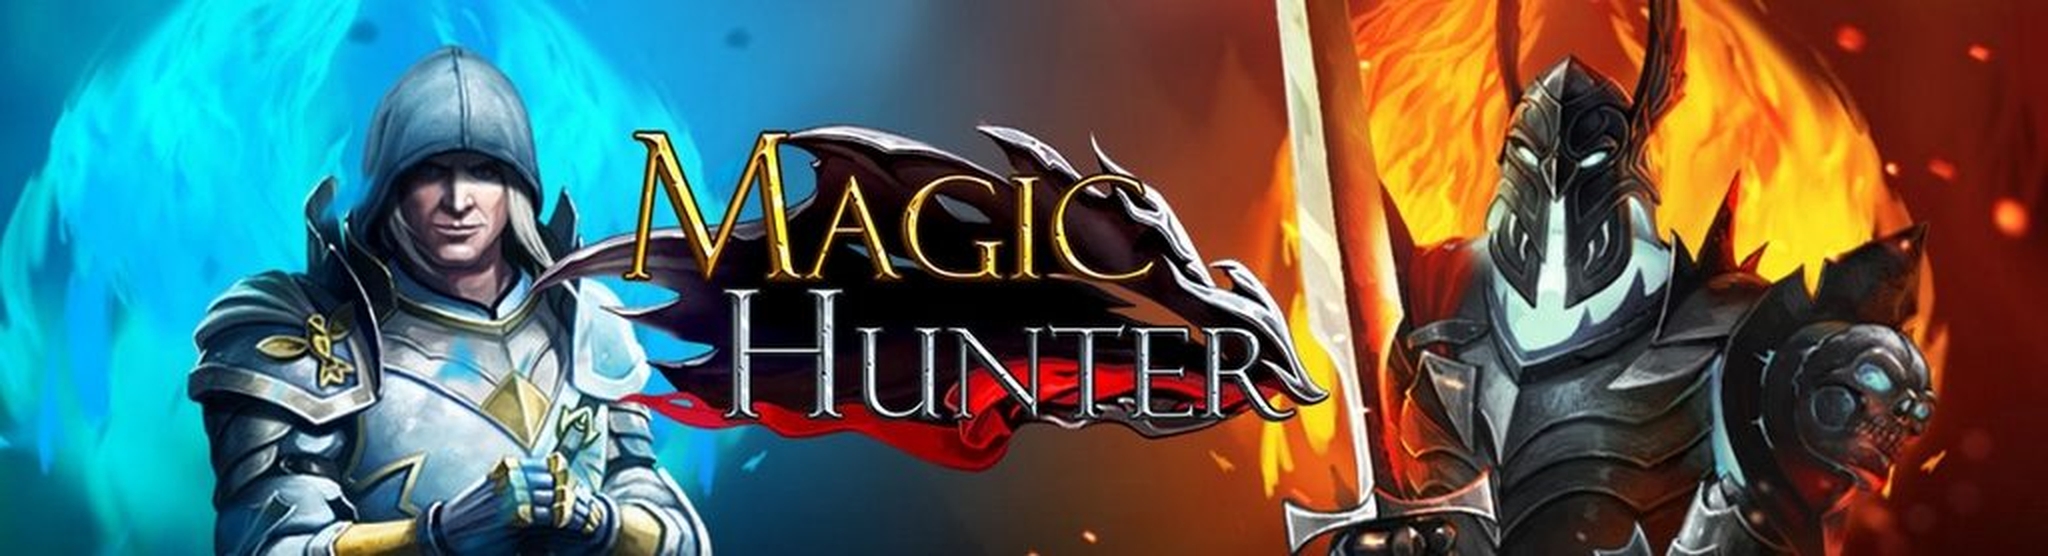 Magic Hunter demo